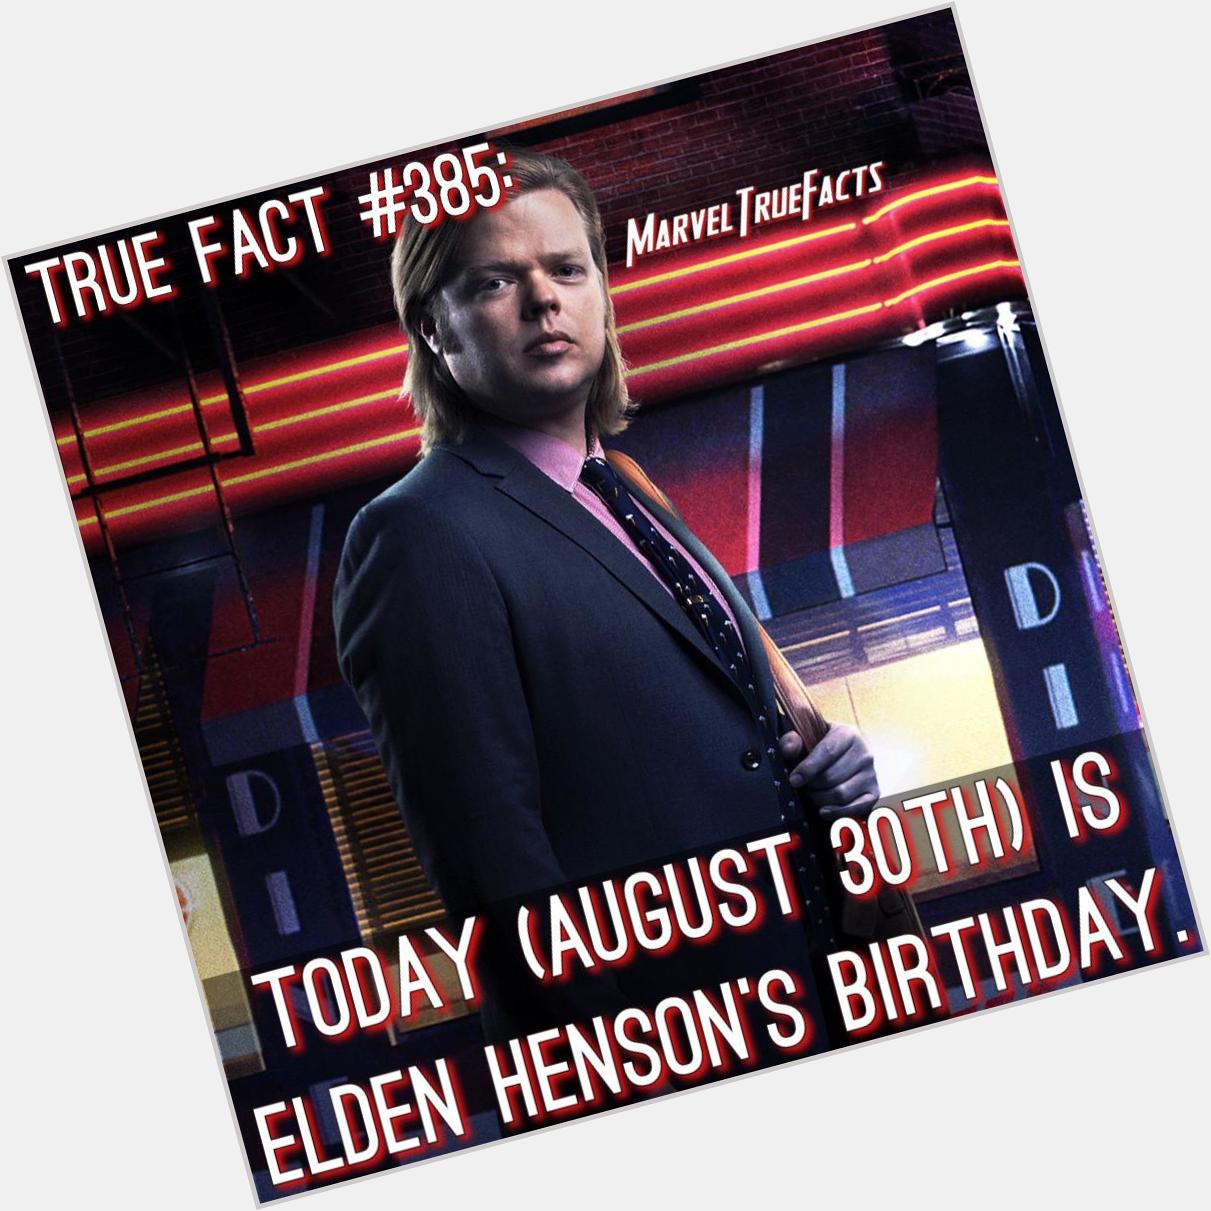 Happy birthday Elden Henson! 